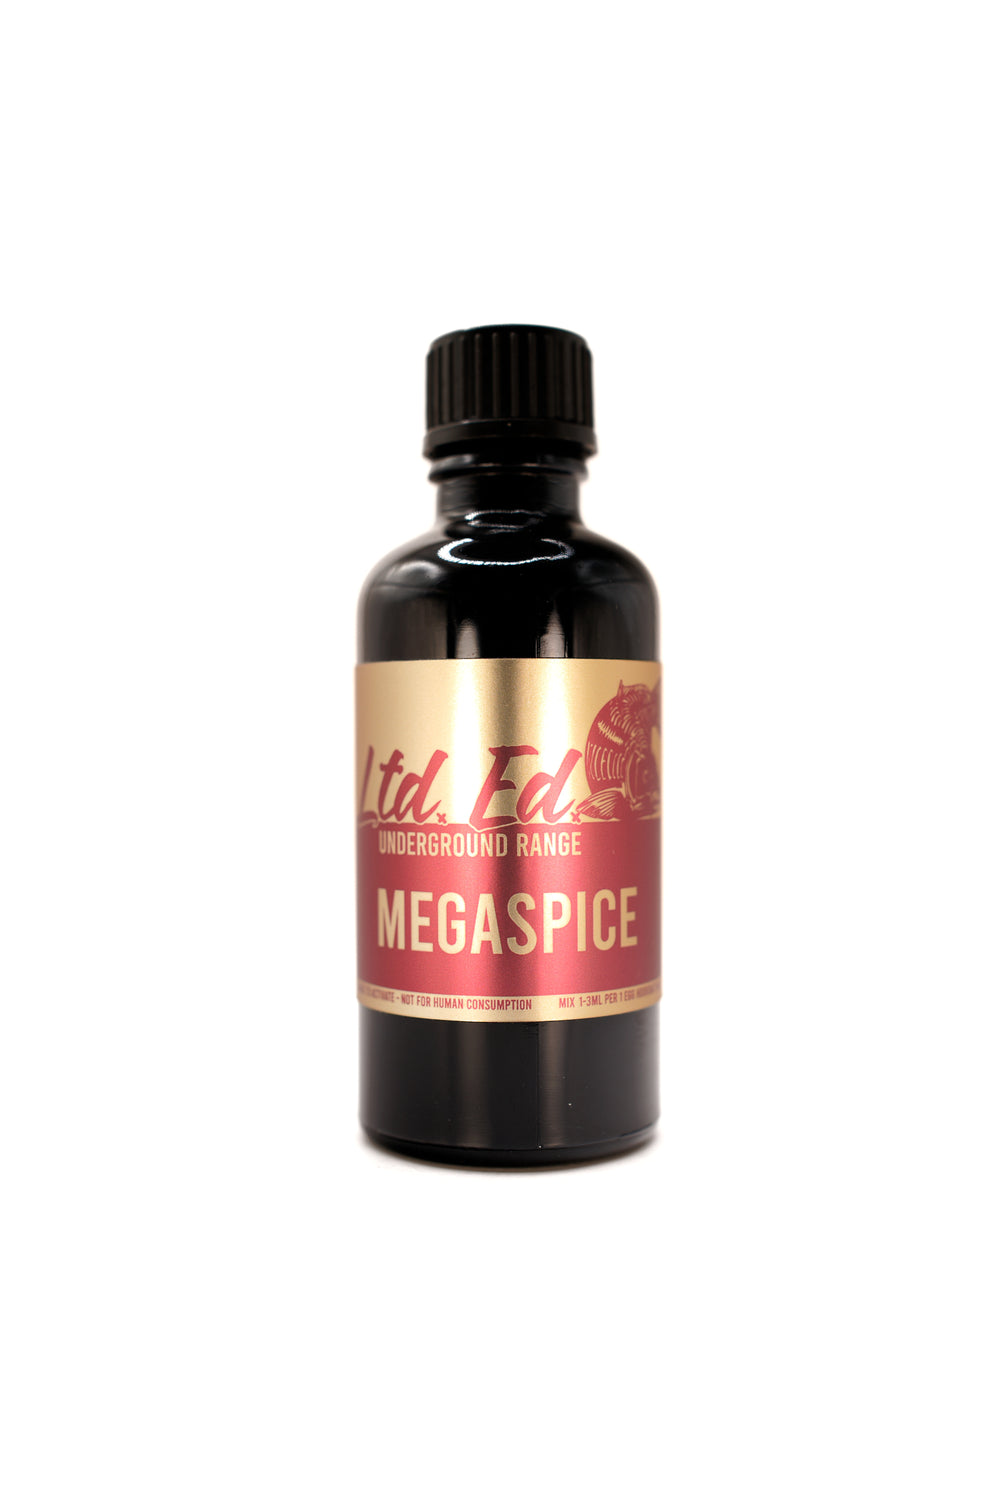 Megaspice flavour [UNDERGROUND RANGE]